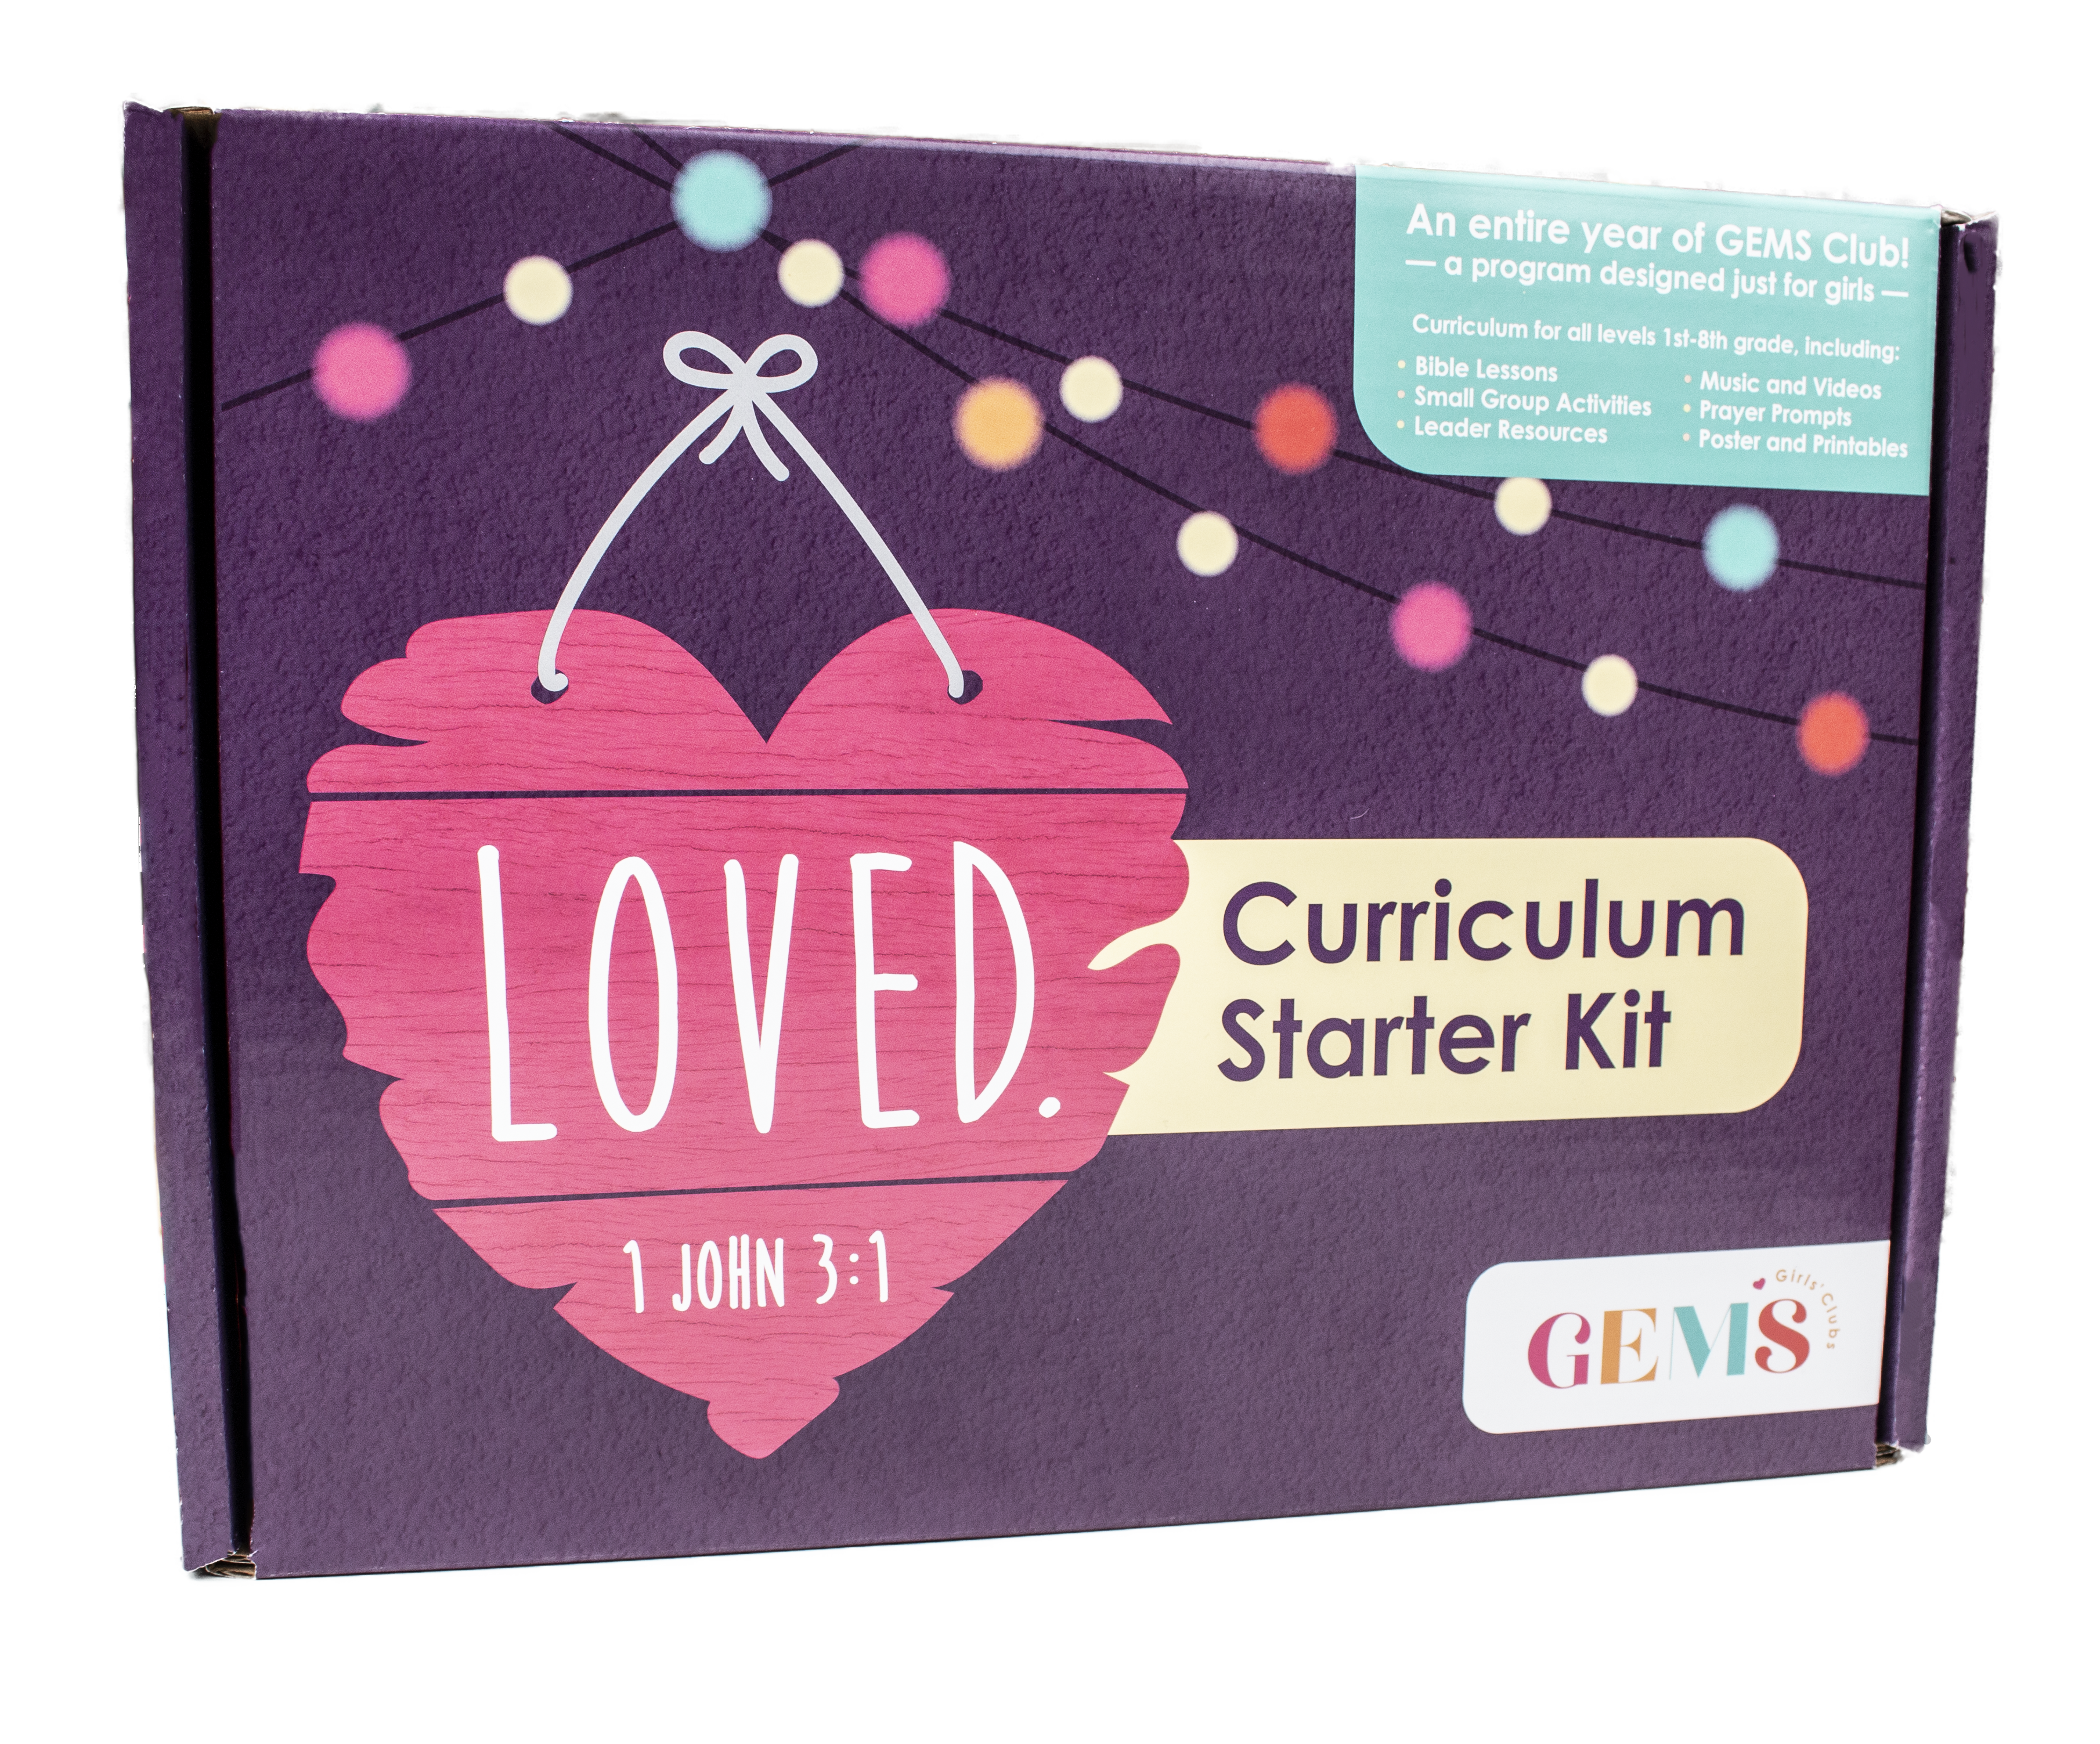 LOVED. Curriculum Starter Kit